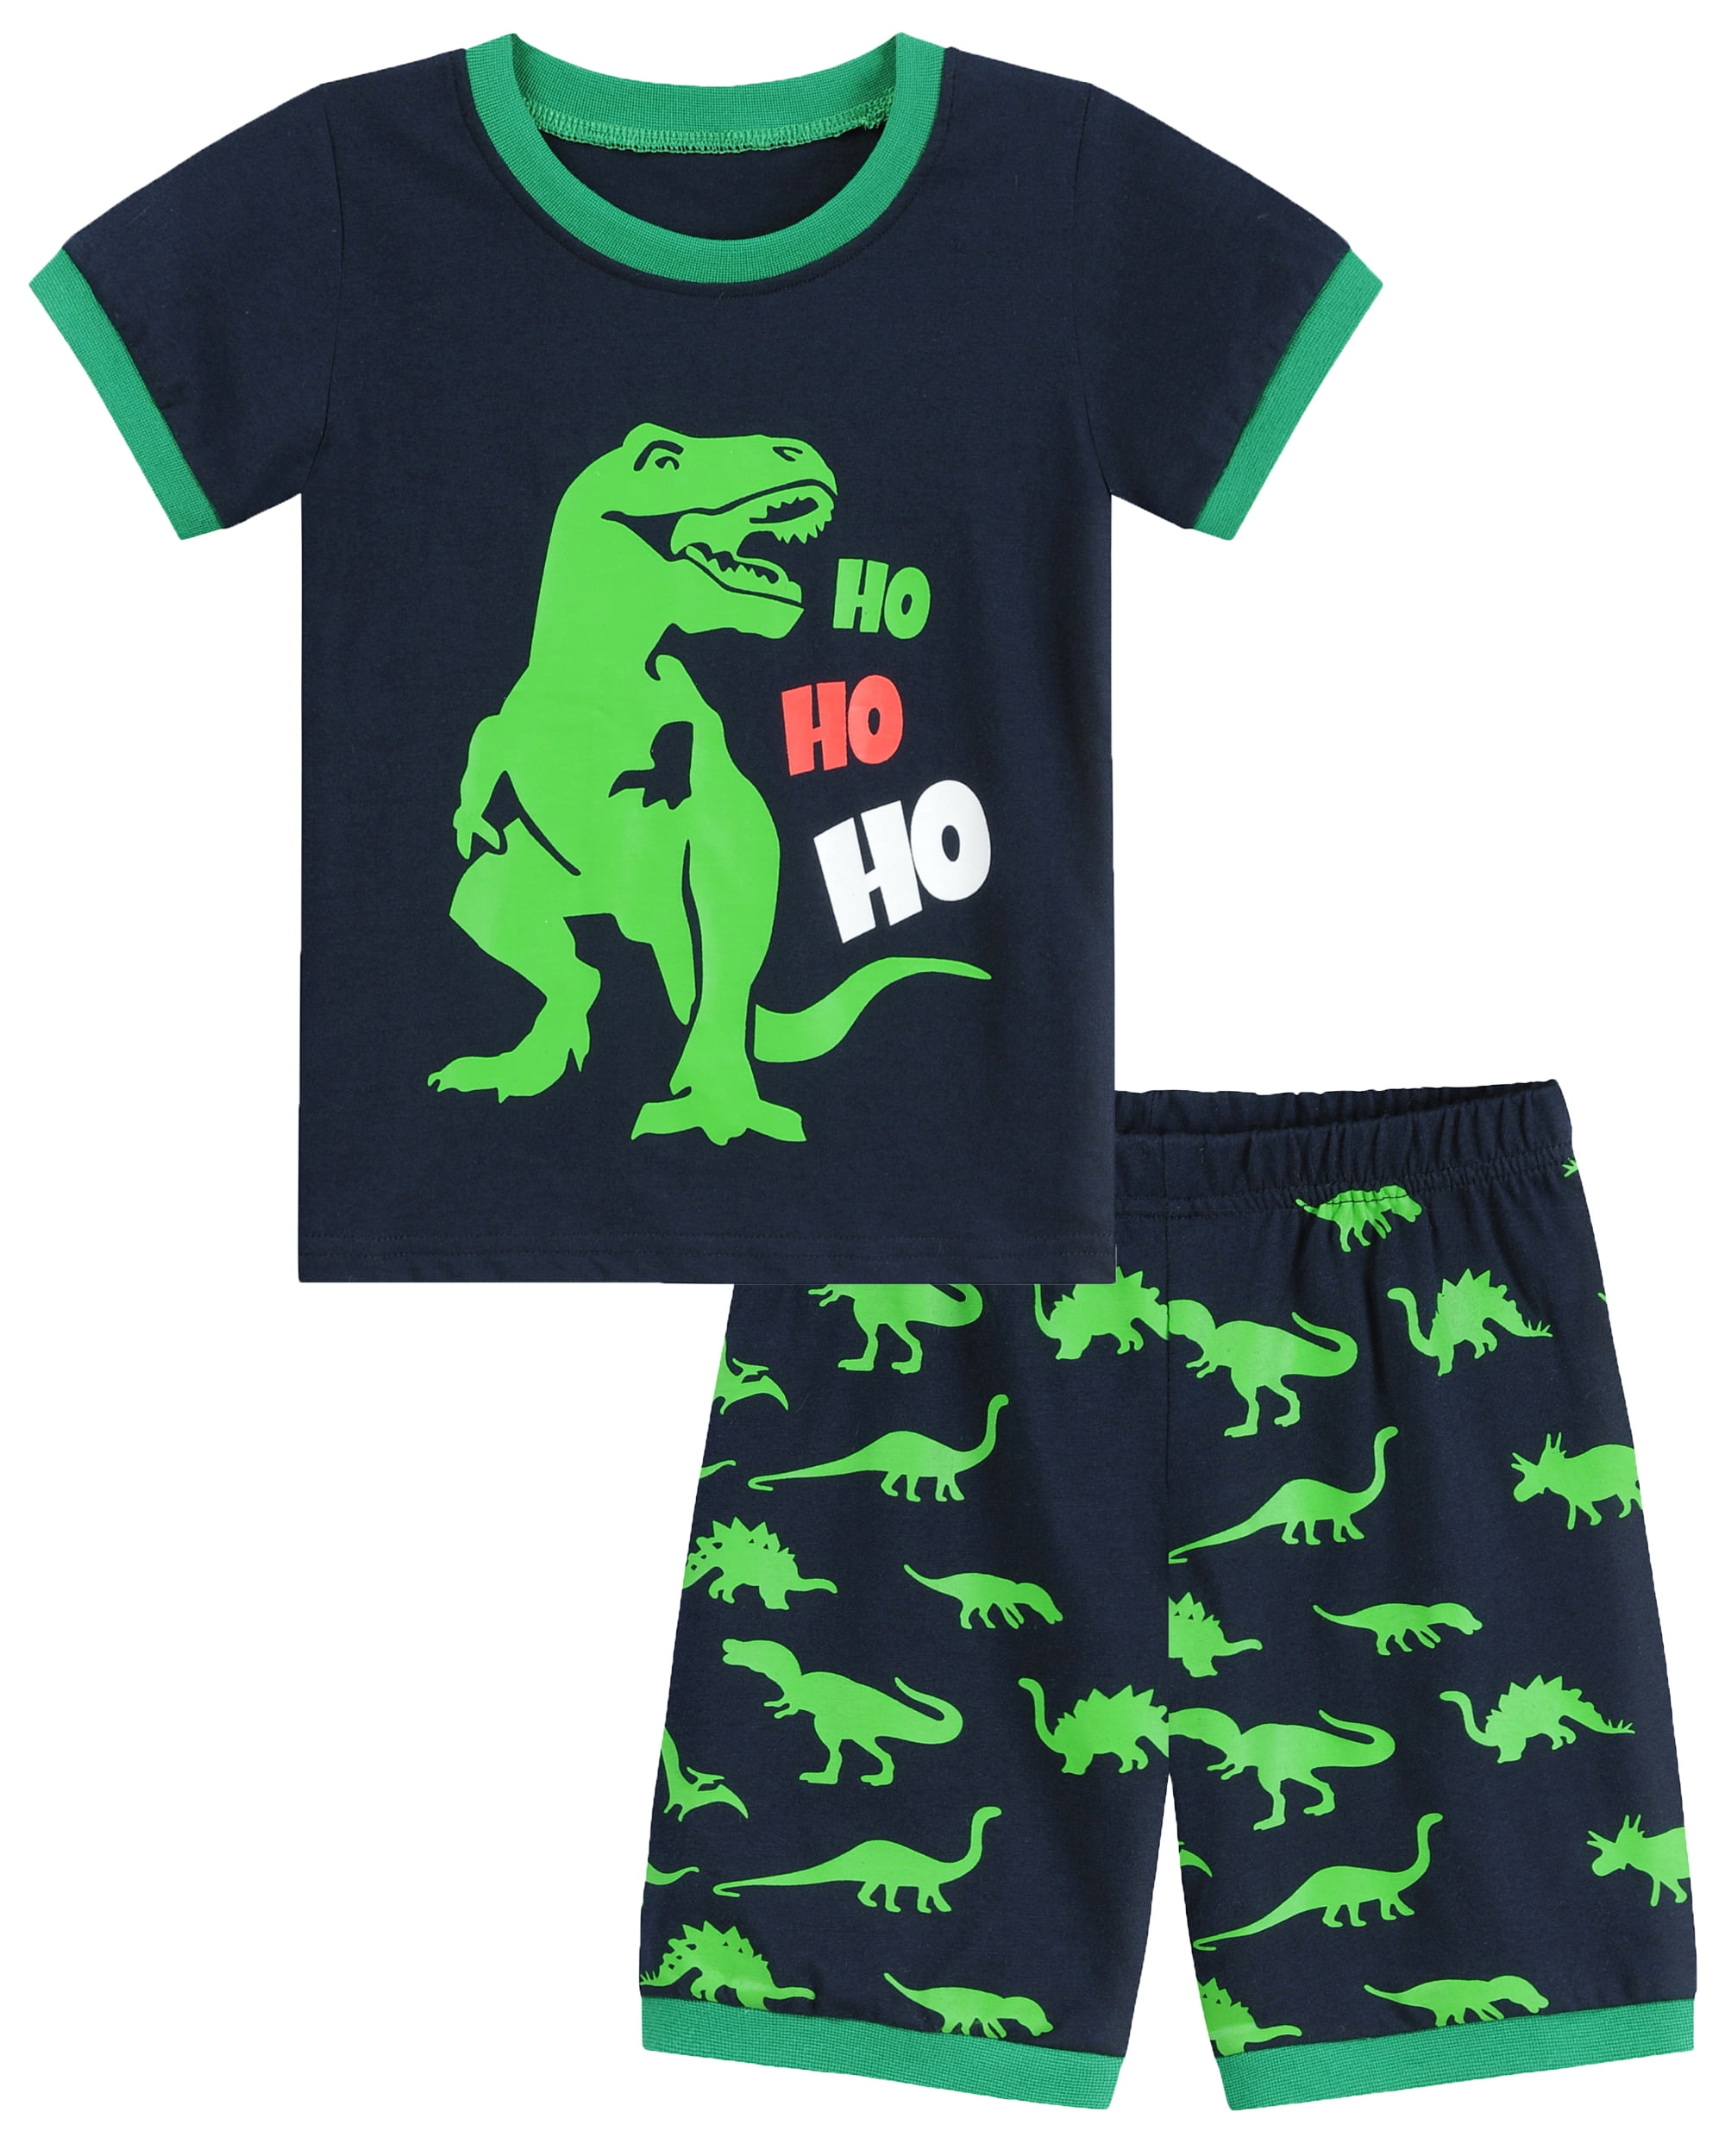 Little Hand Boys Summer Sleepwear for Boy Kids Dinosaur Pajamas Set 6T ...